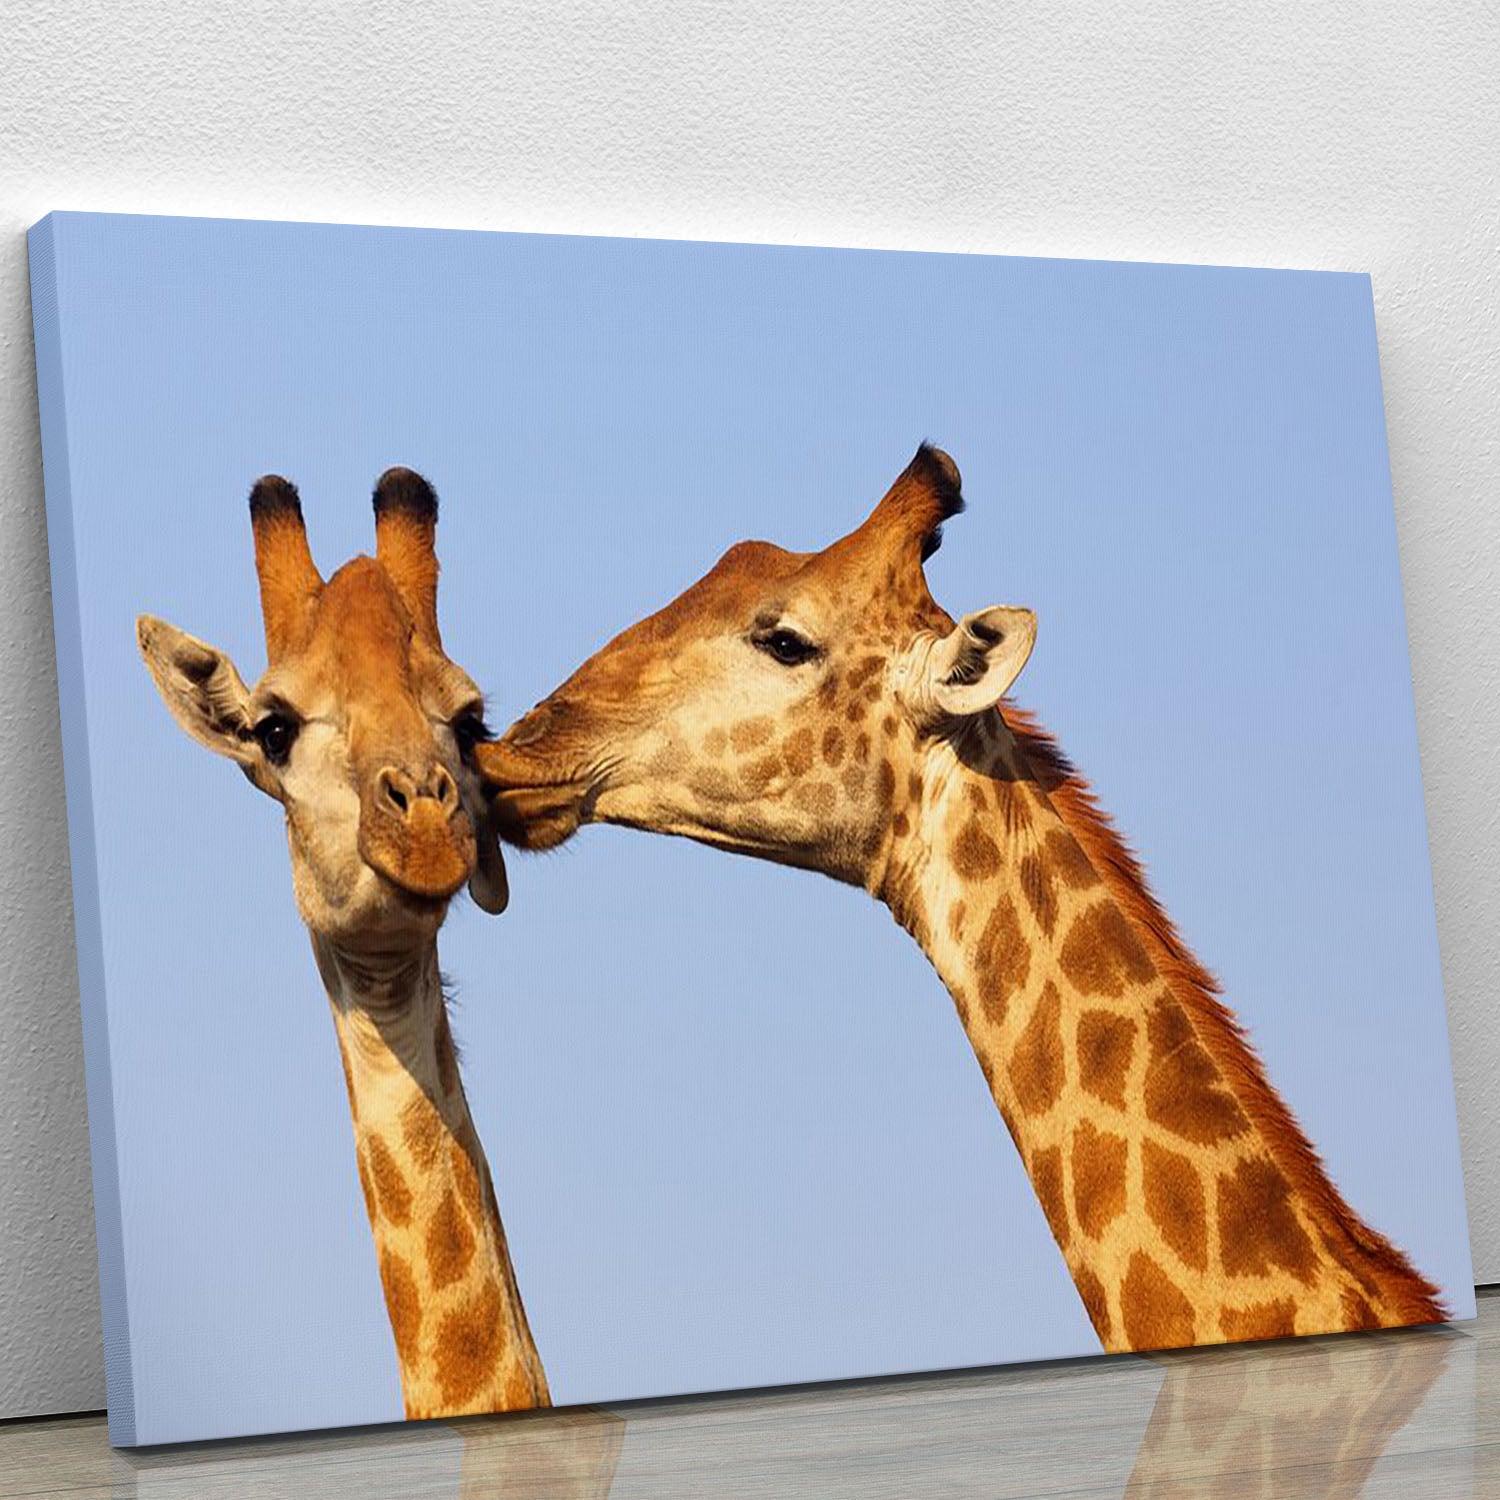 Giraffe pair bonding Canvas Print or Poster - Canvas Art Rocks - 1